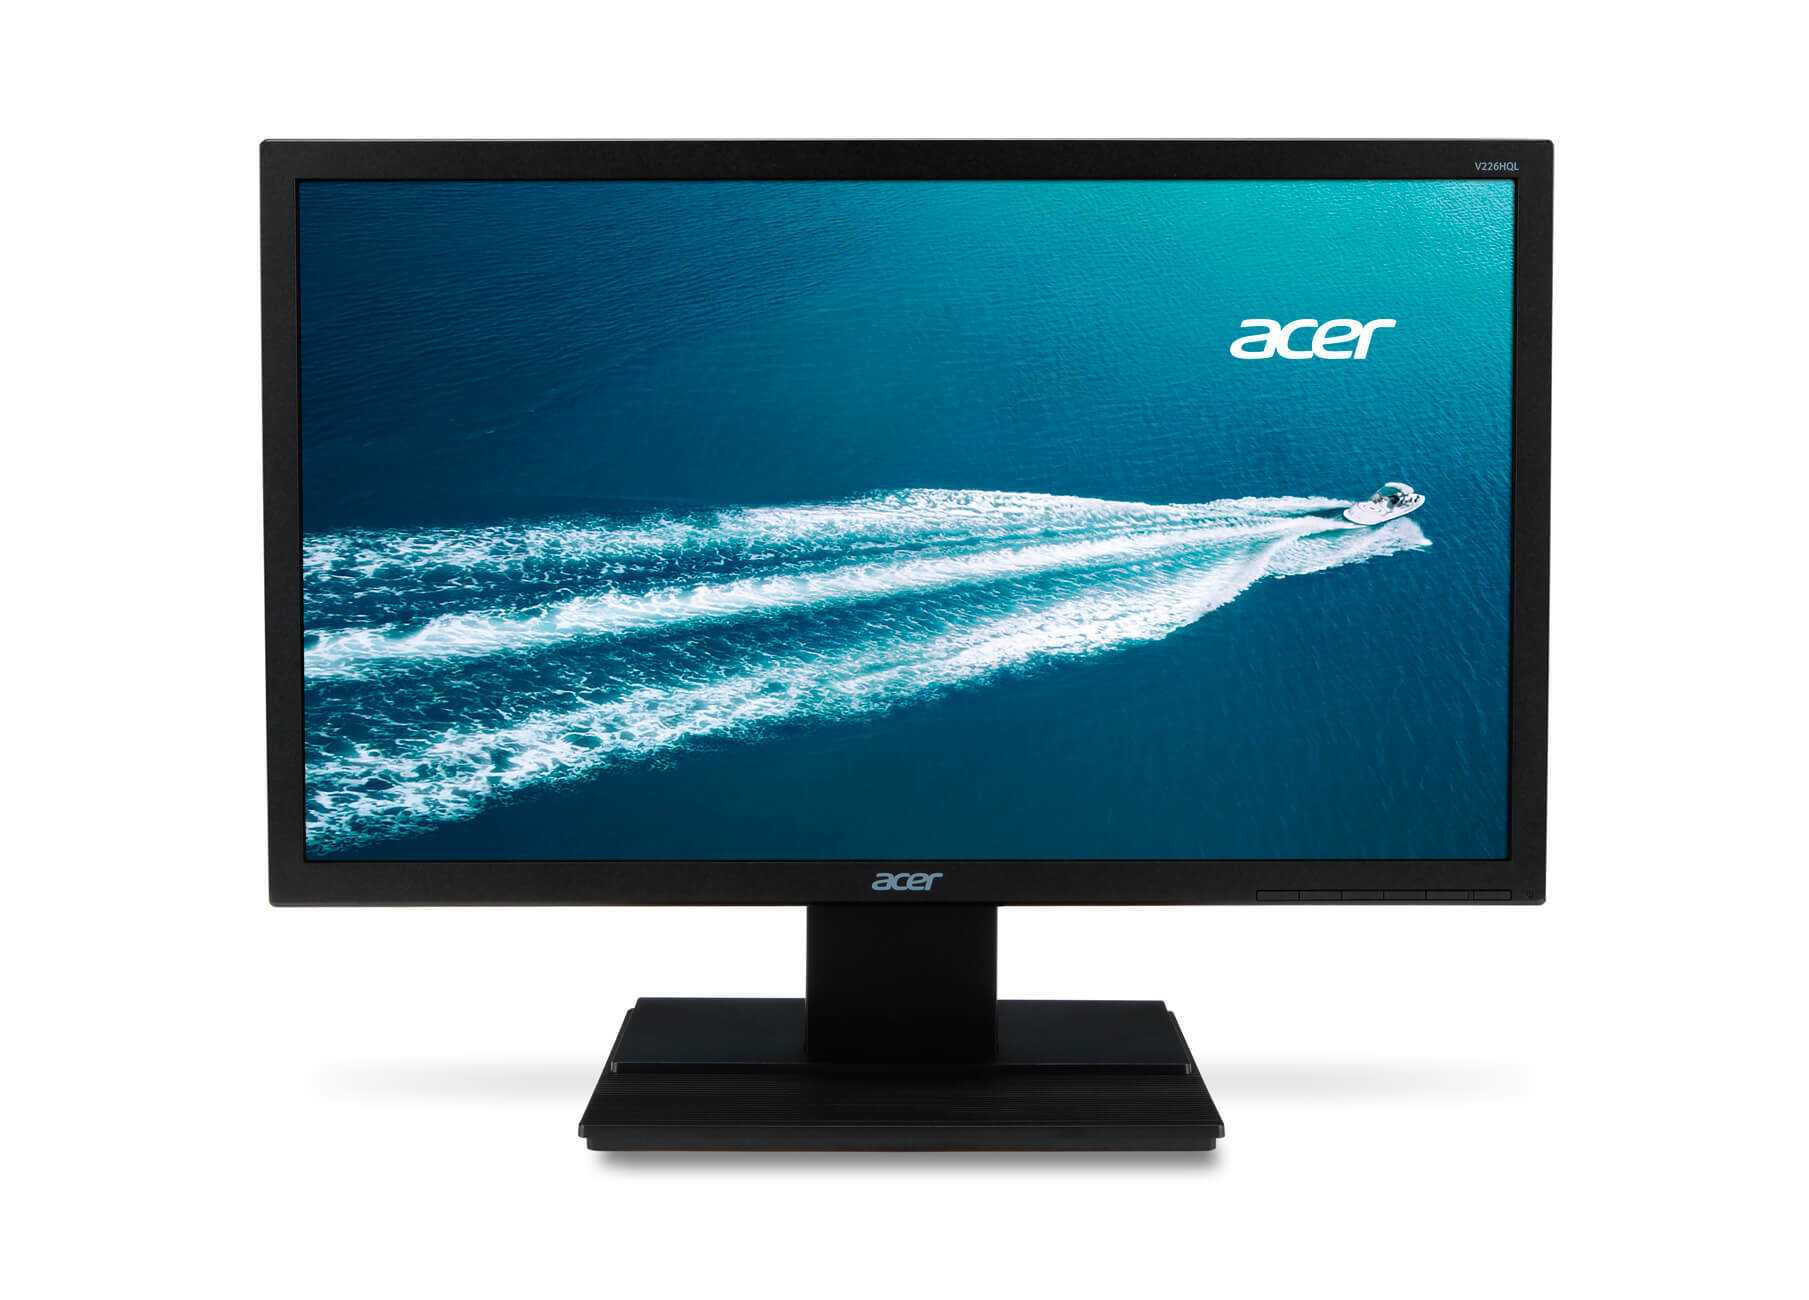 Monitor Acer V226hql Hbi